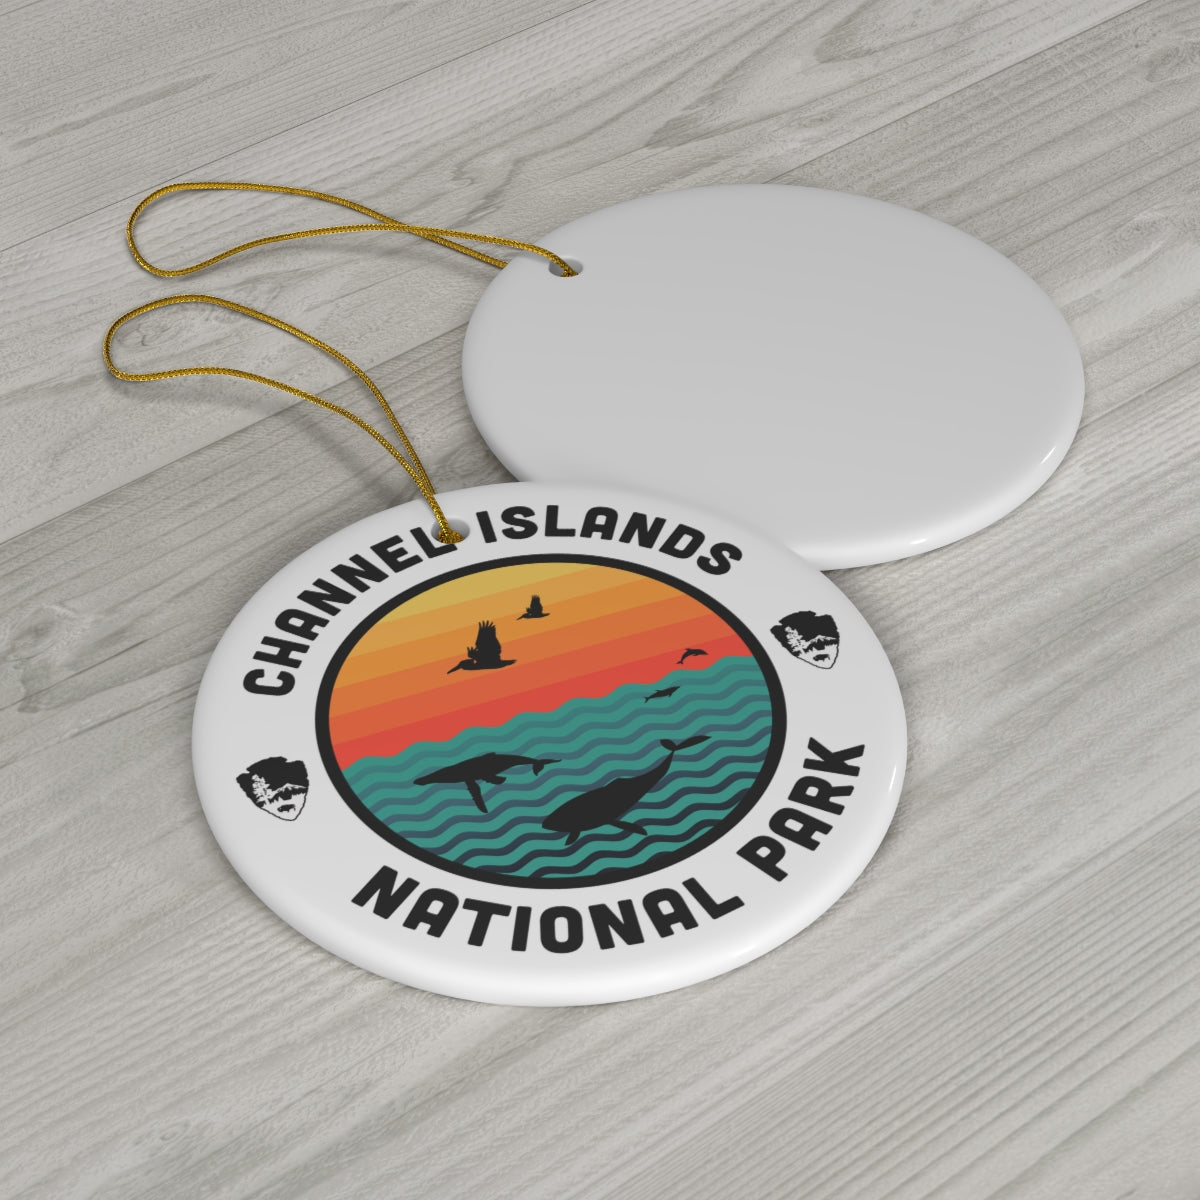 Channel Islands National Park Ornament - Round Emblem Design